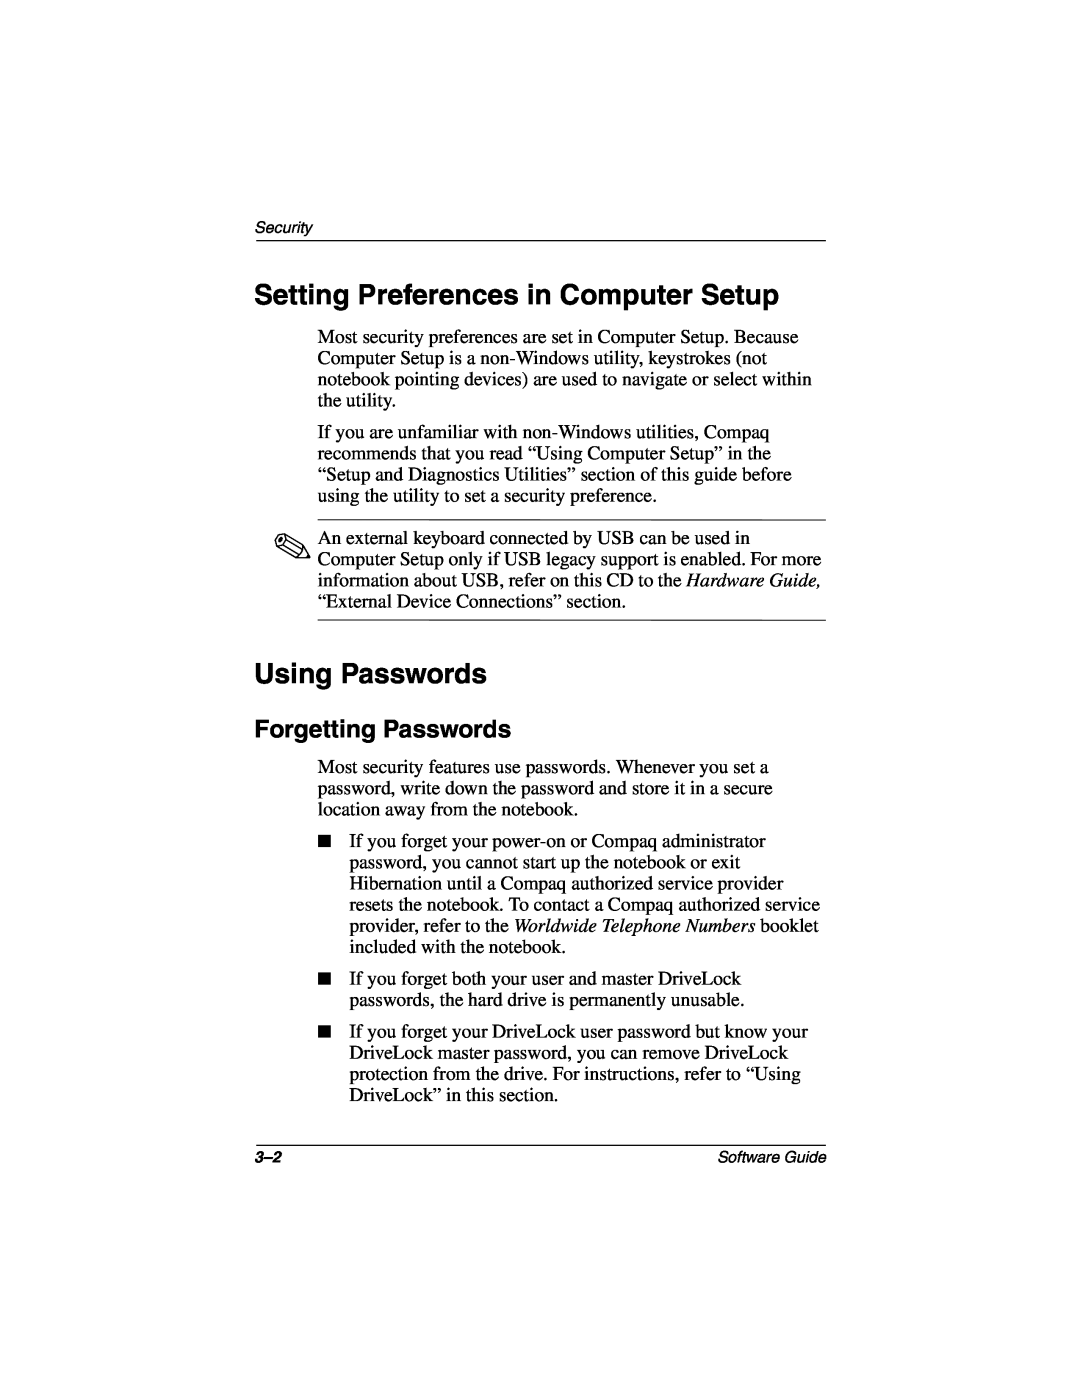 HP 2869AP, 2899AP, 2897AP, 2896AP, 2898AP, 2892AP Setting Preferences in Computer Setup, Using Passwords, Forgetting Passwords 